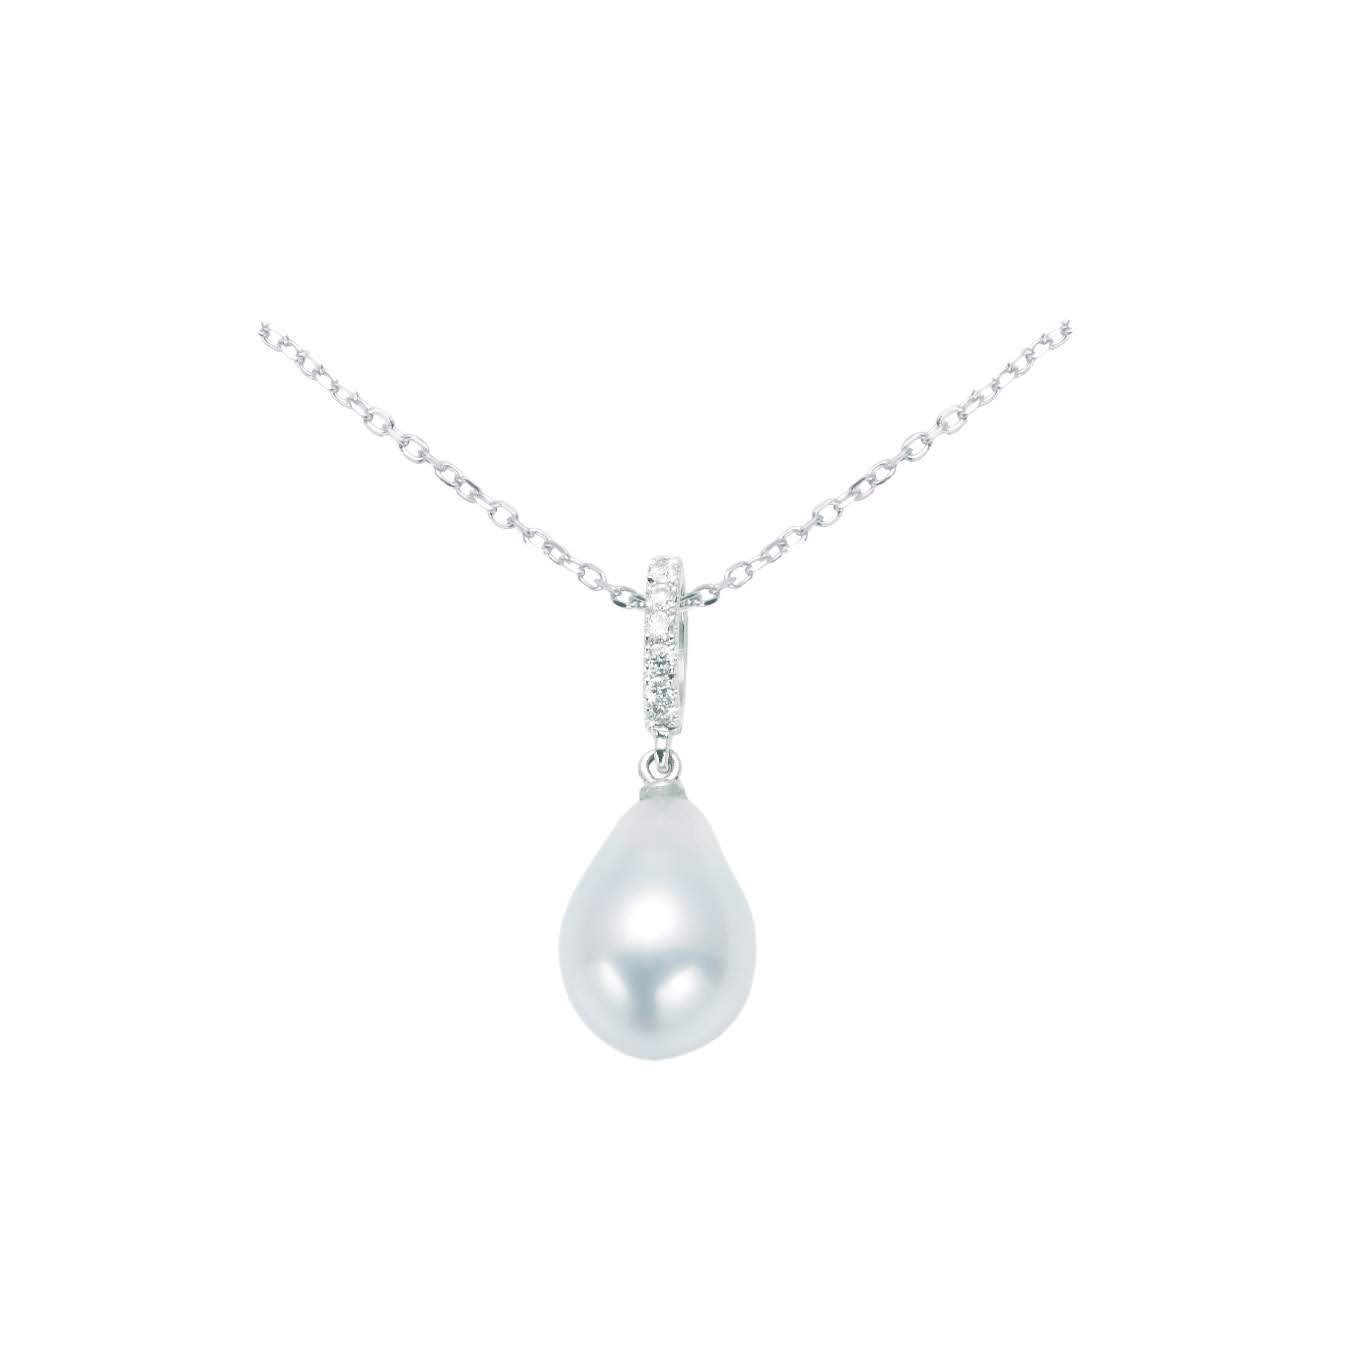 Whitel Gold Pearl and diamond pendant.